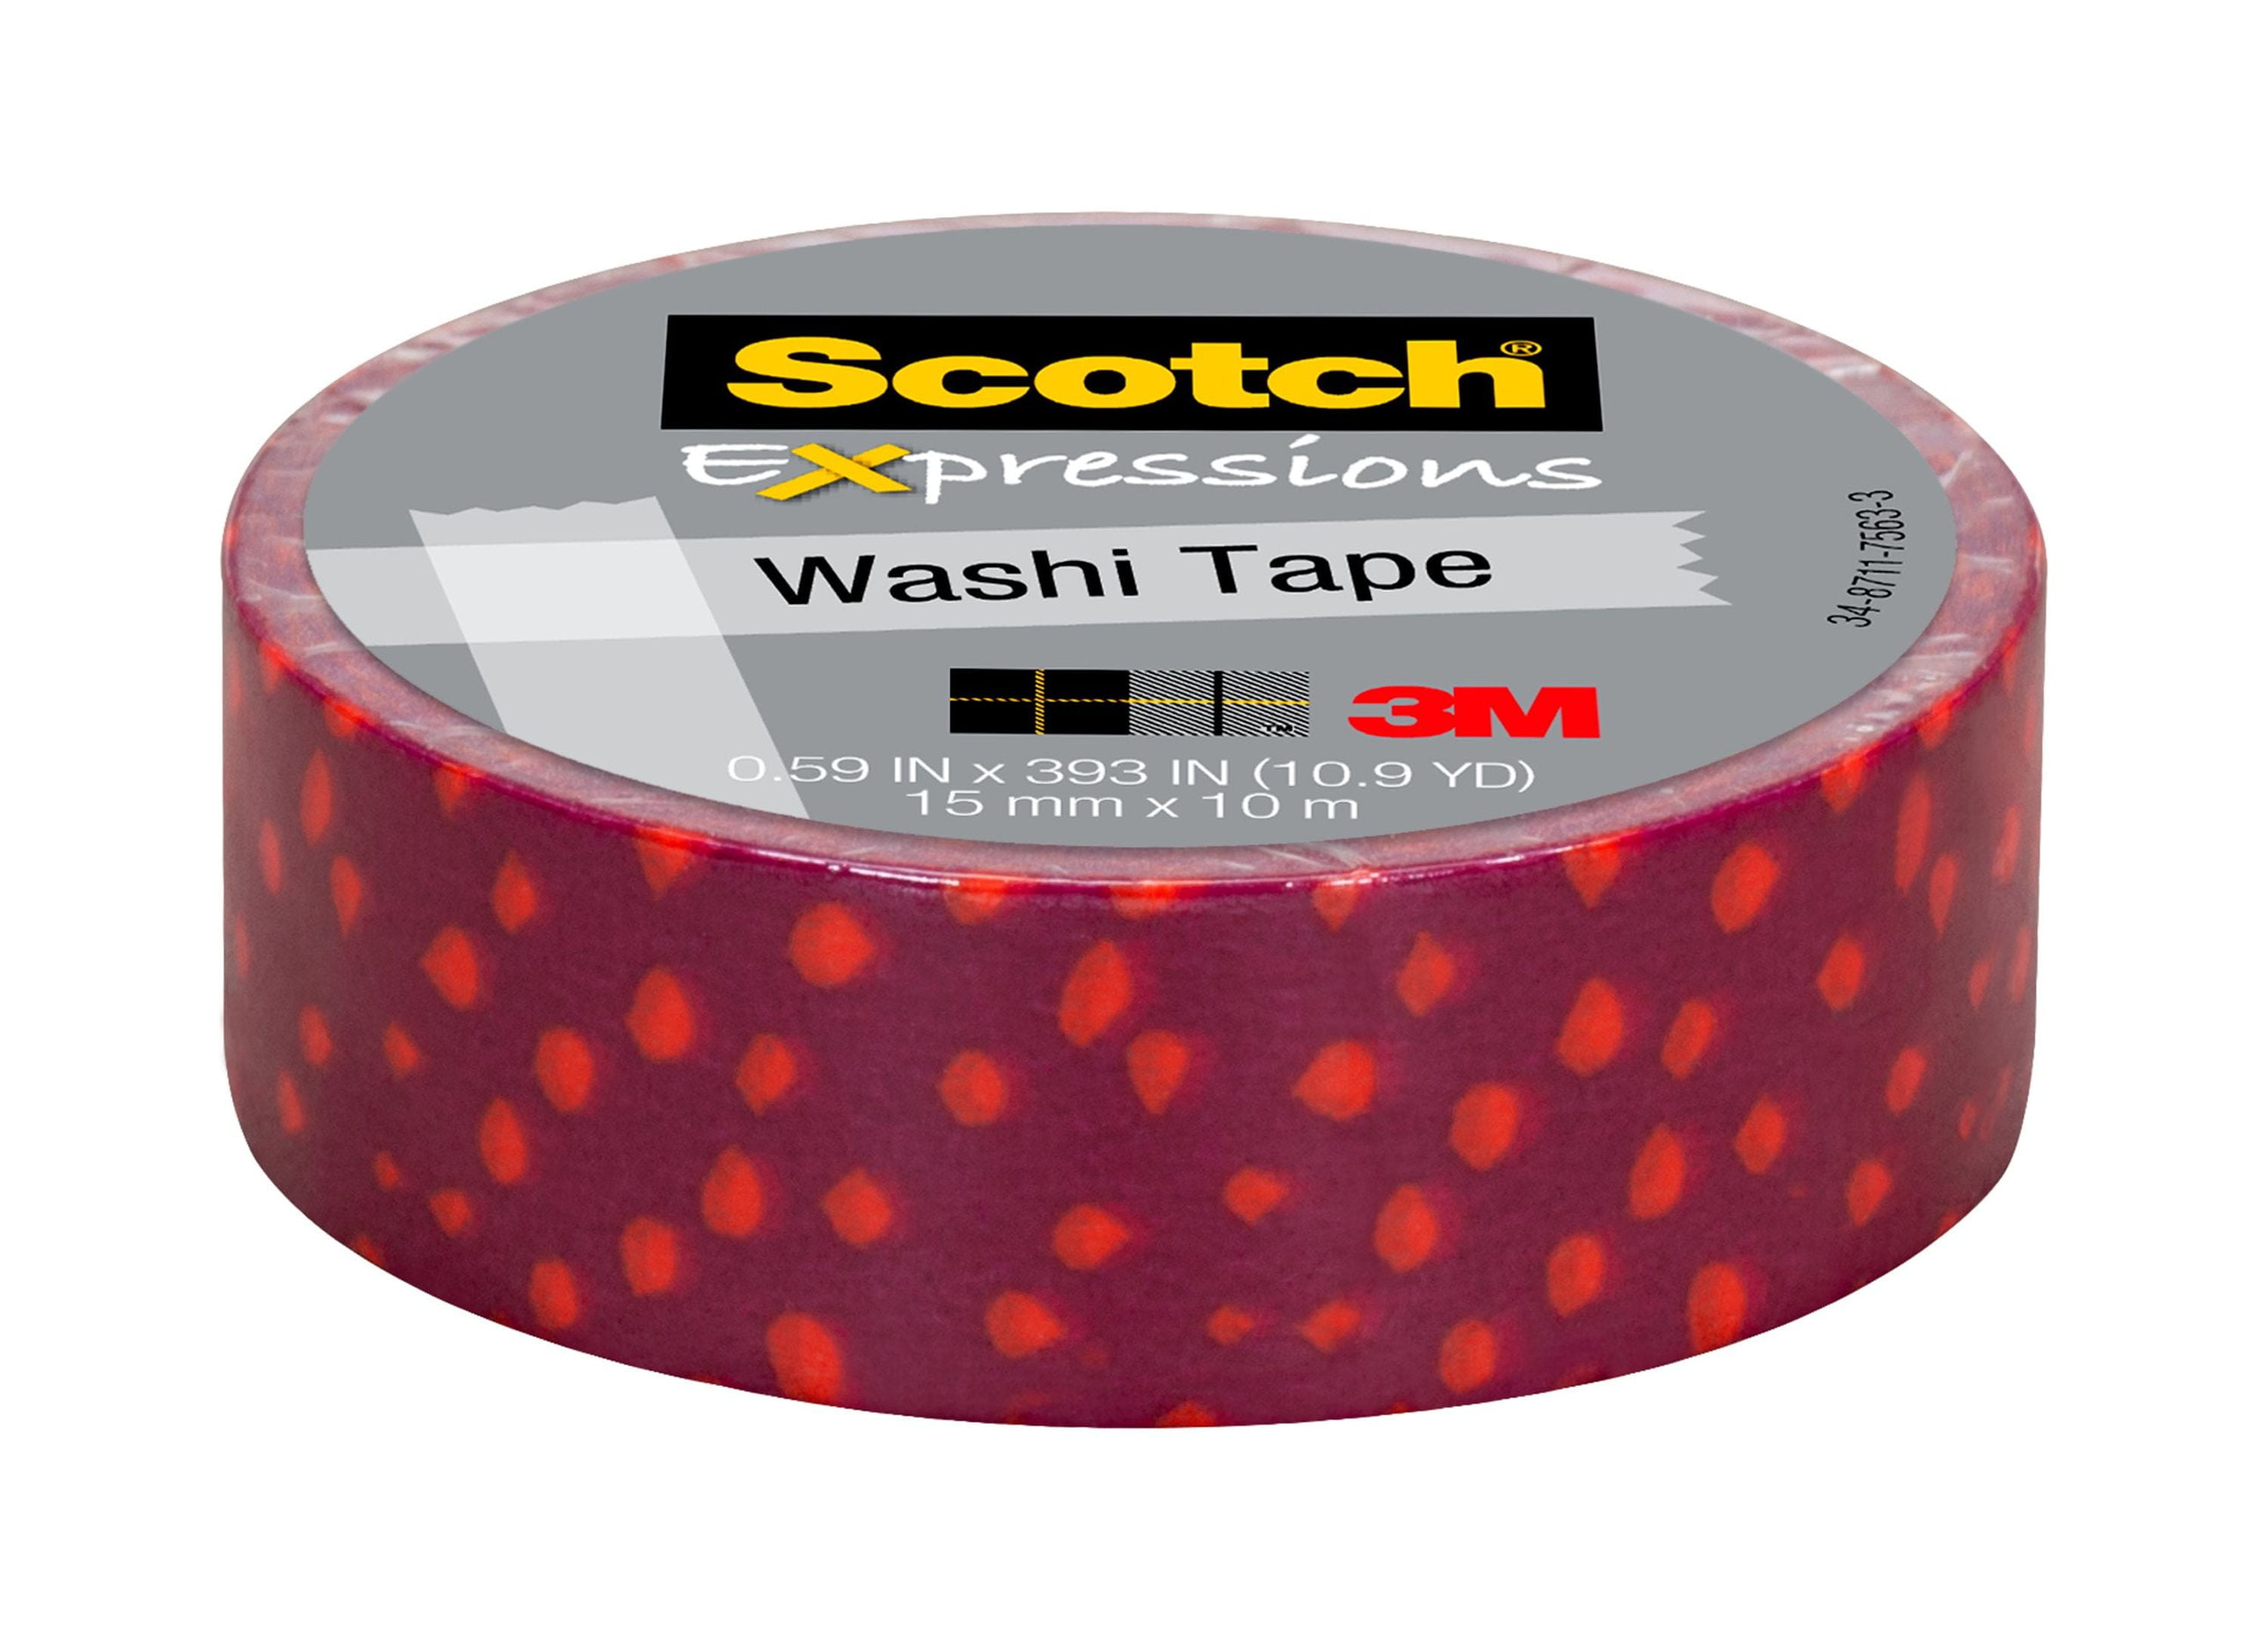 Scotch Expressions Washi Tape, Pink, .59 x 393, 1 Roll